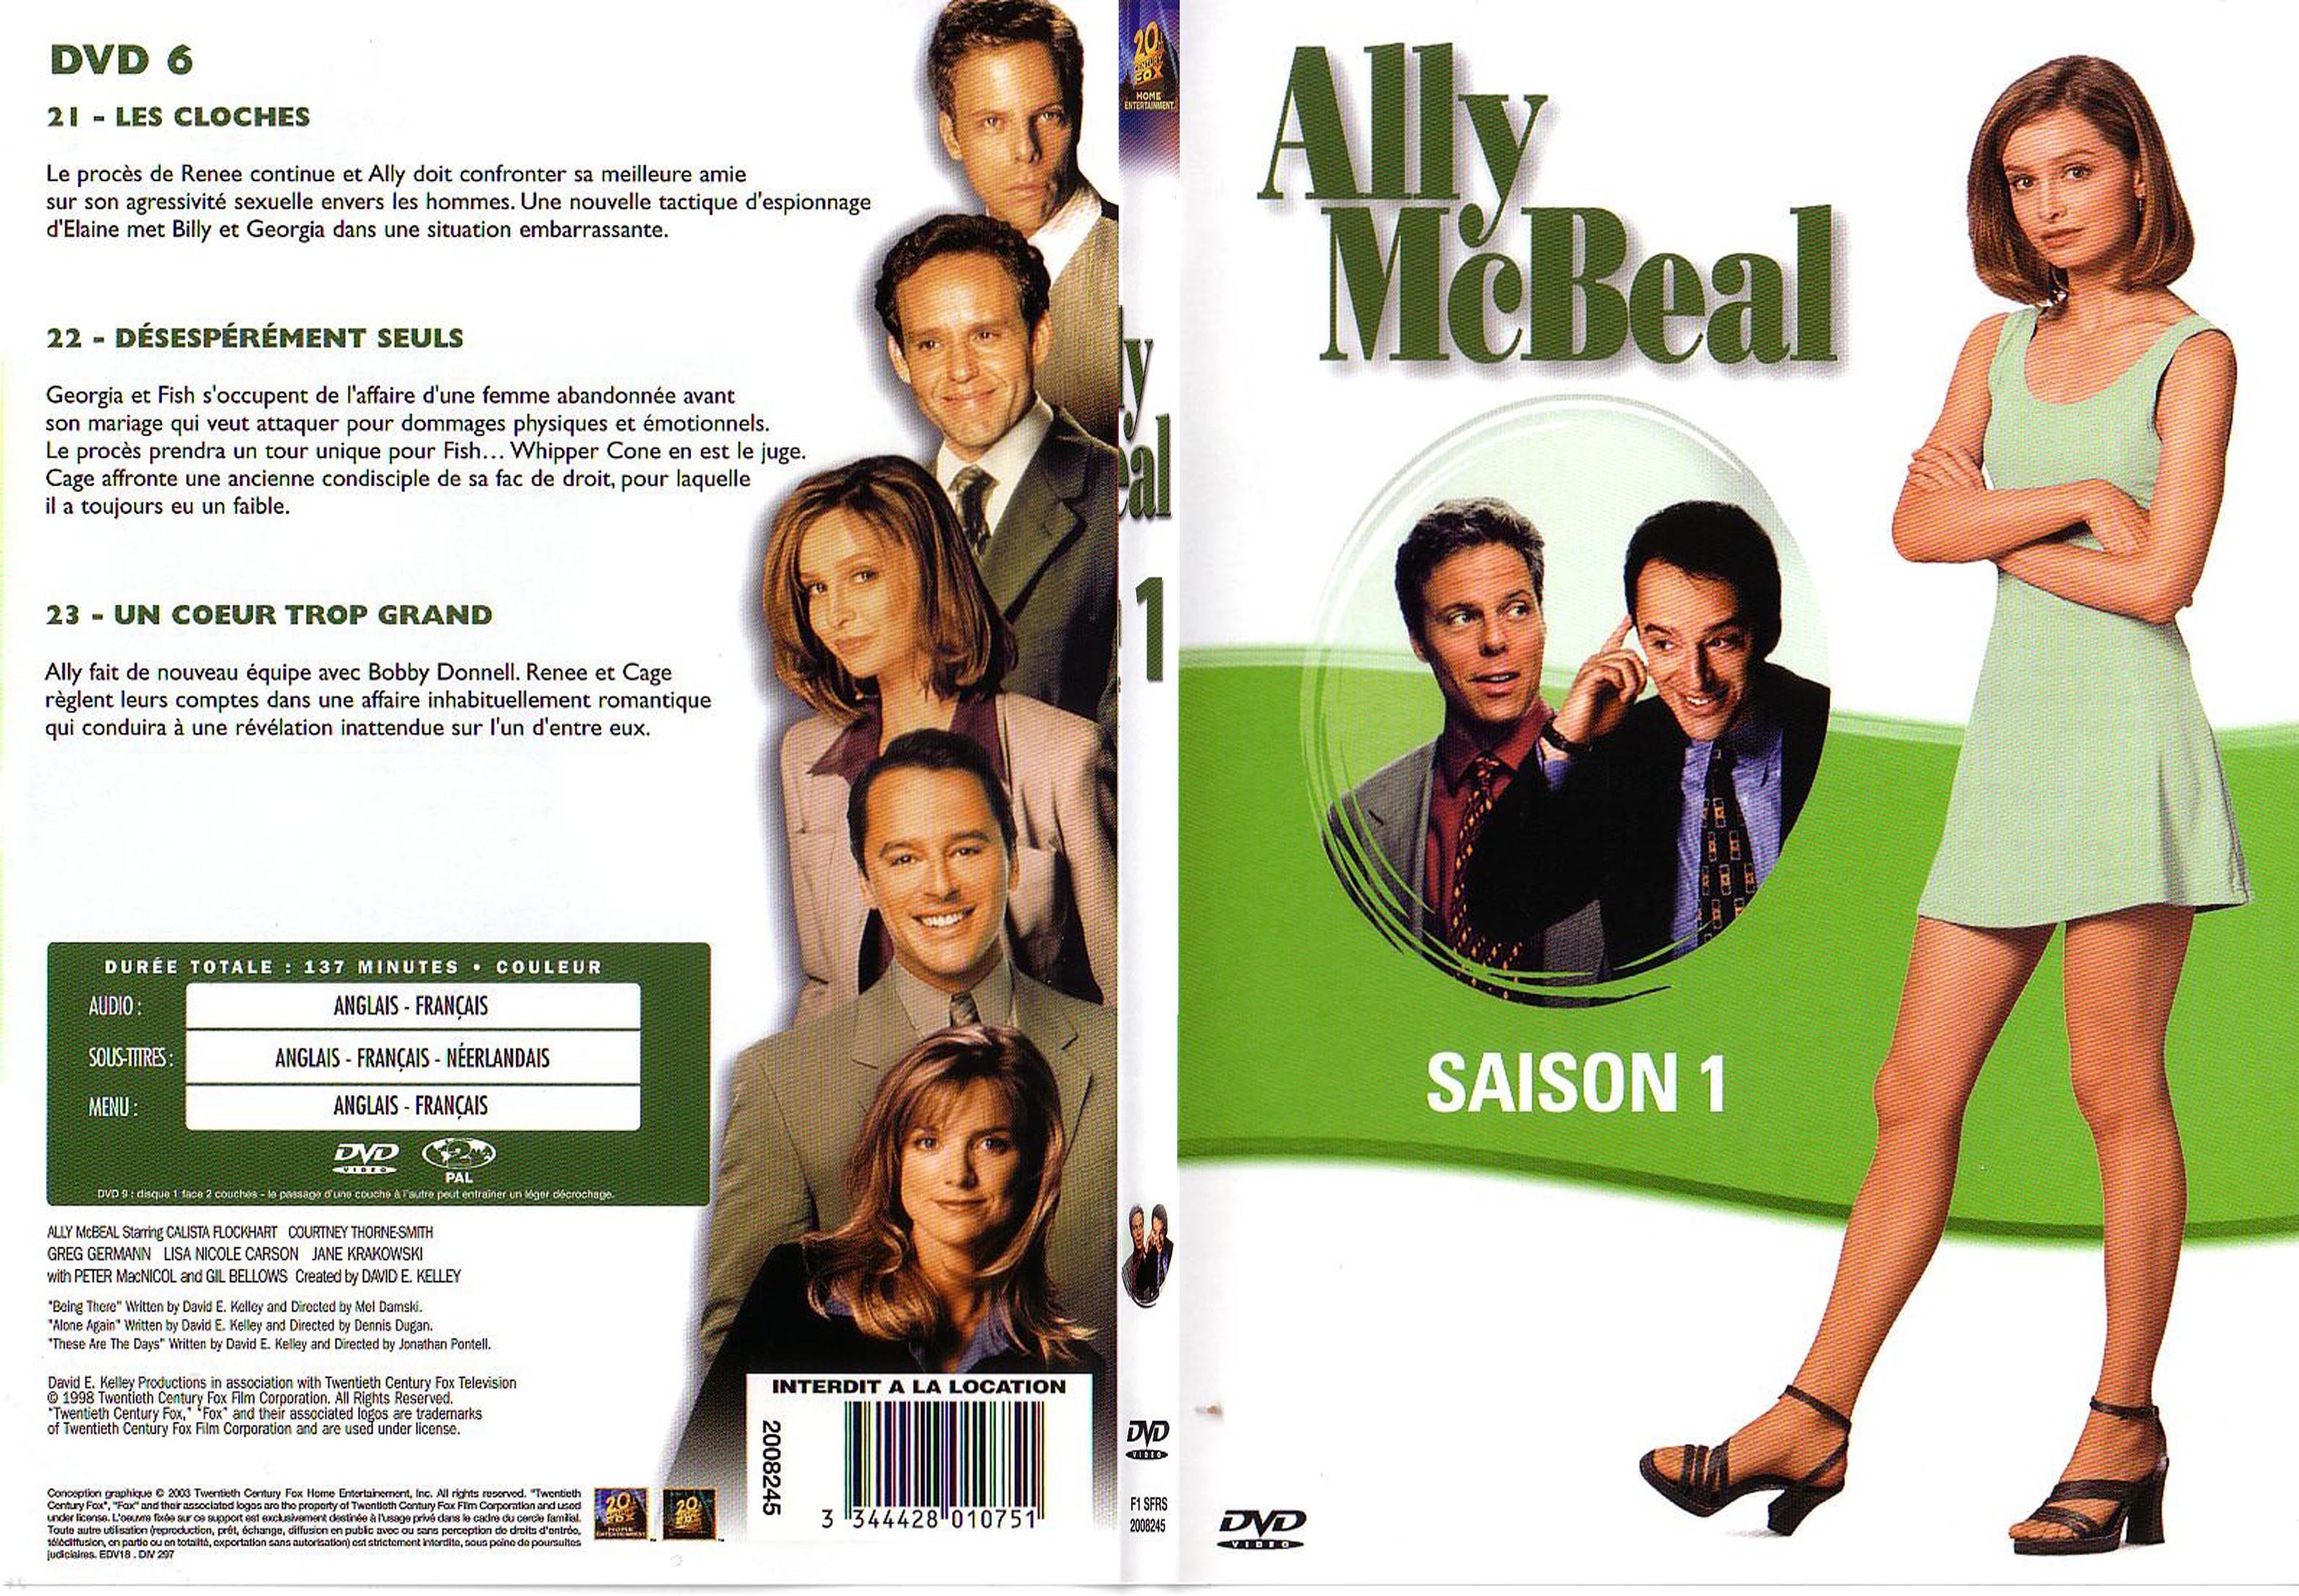 Jaquette DVD Ally McBeal saison 1 dvd 6 - SLIM